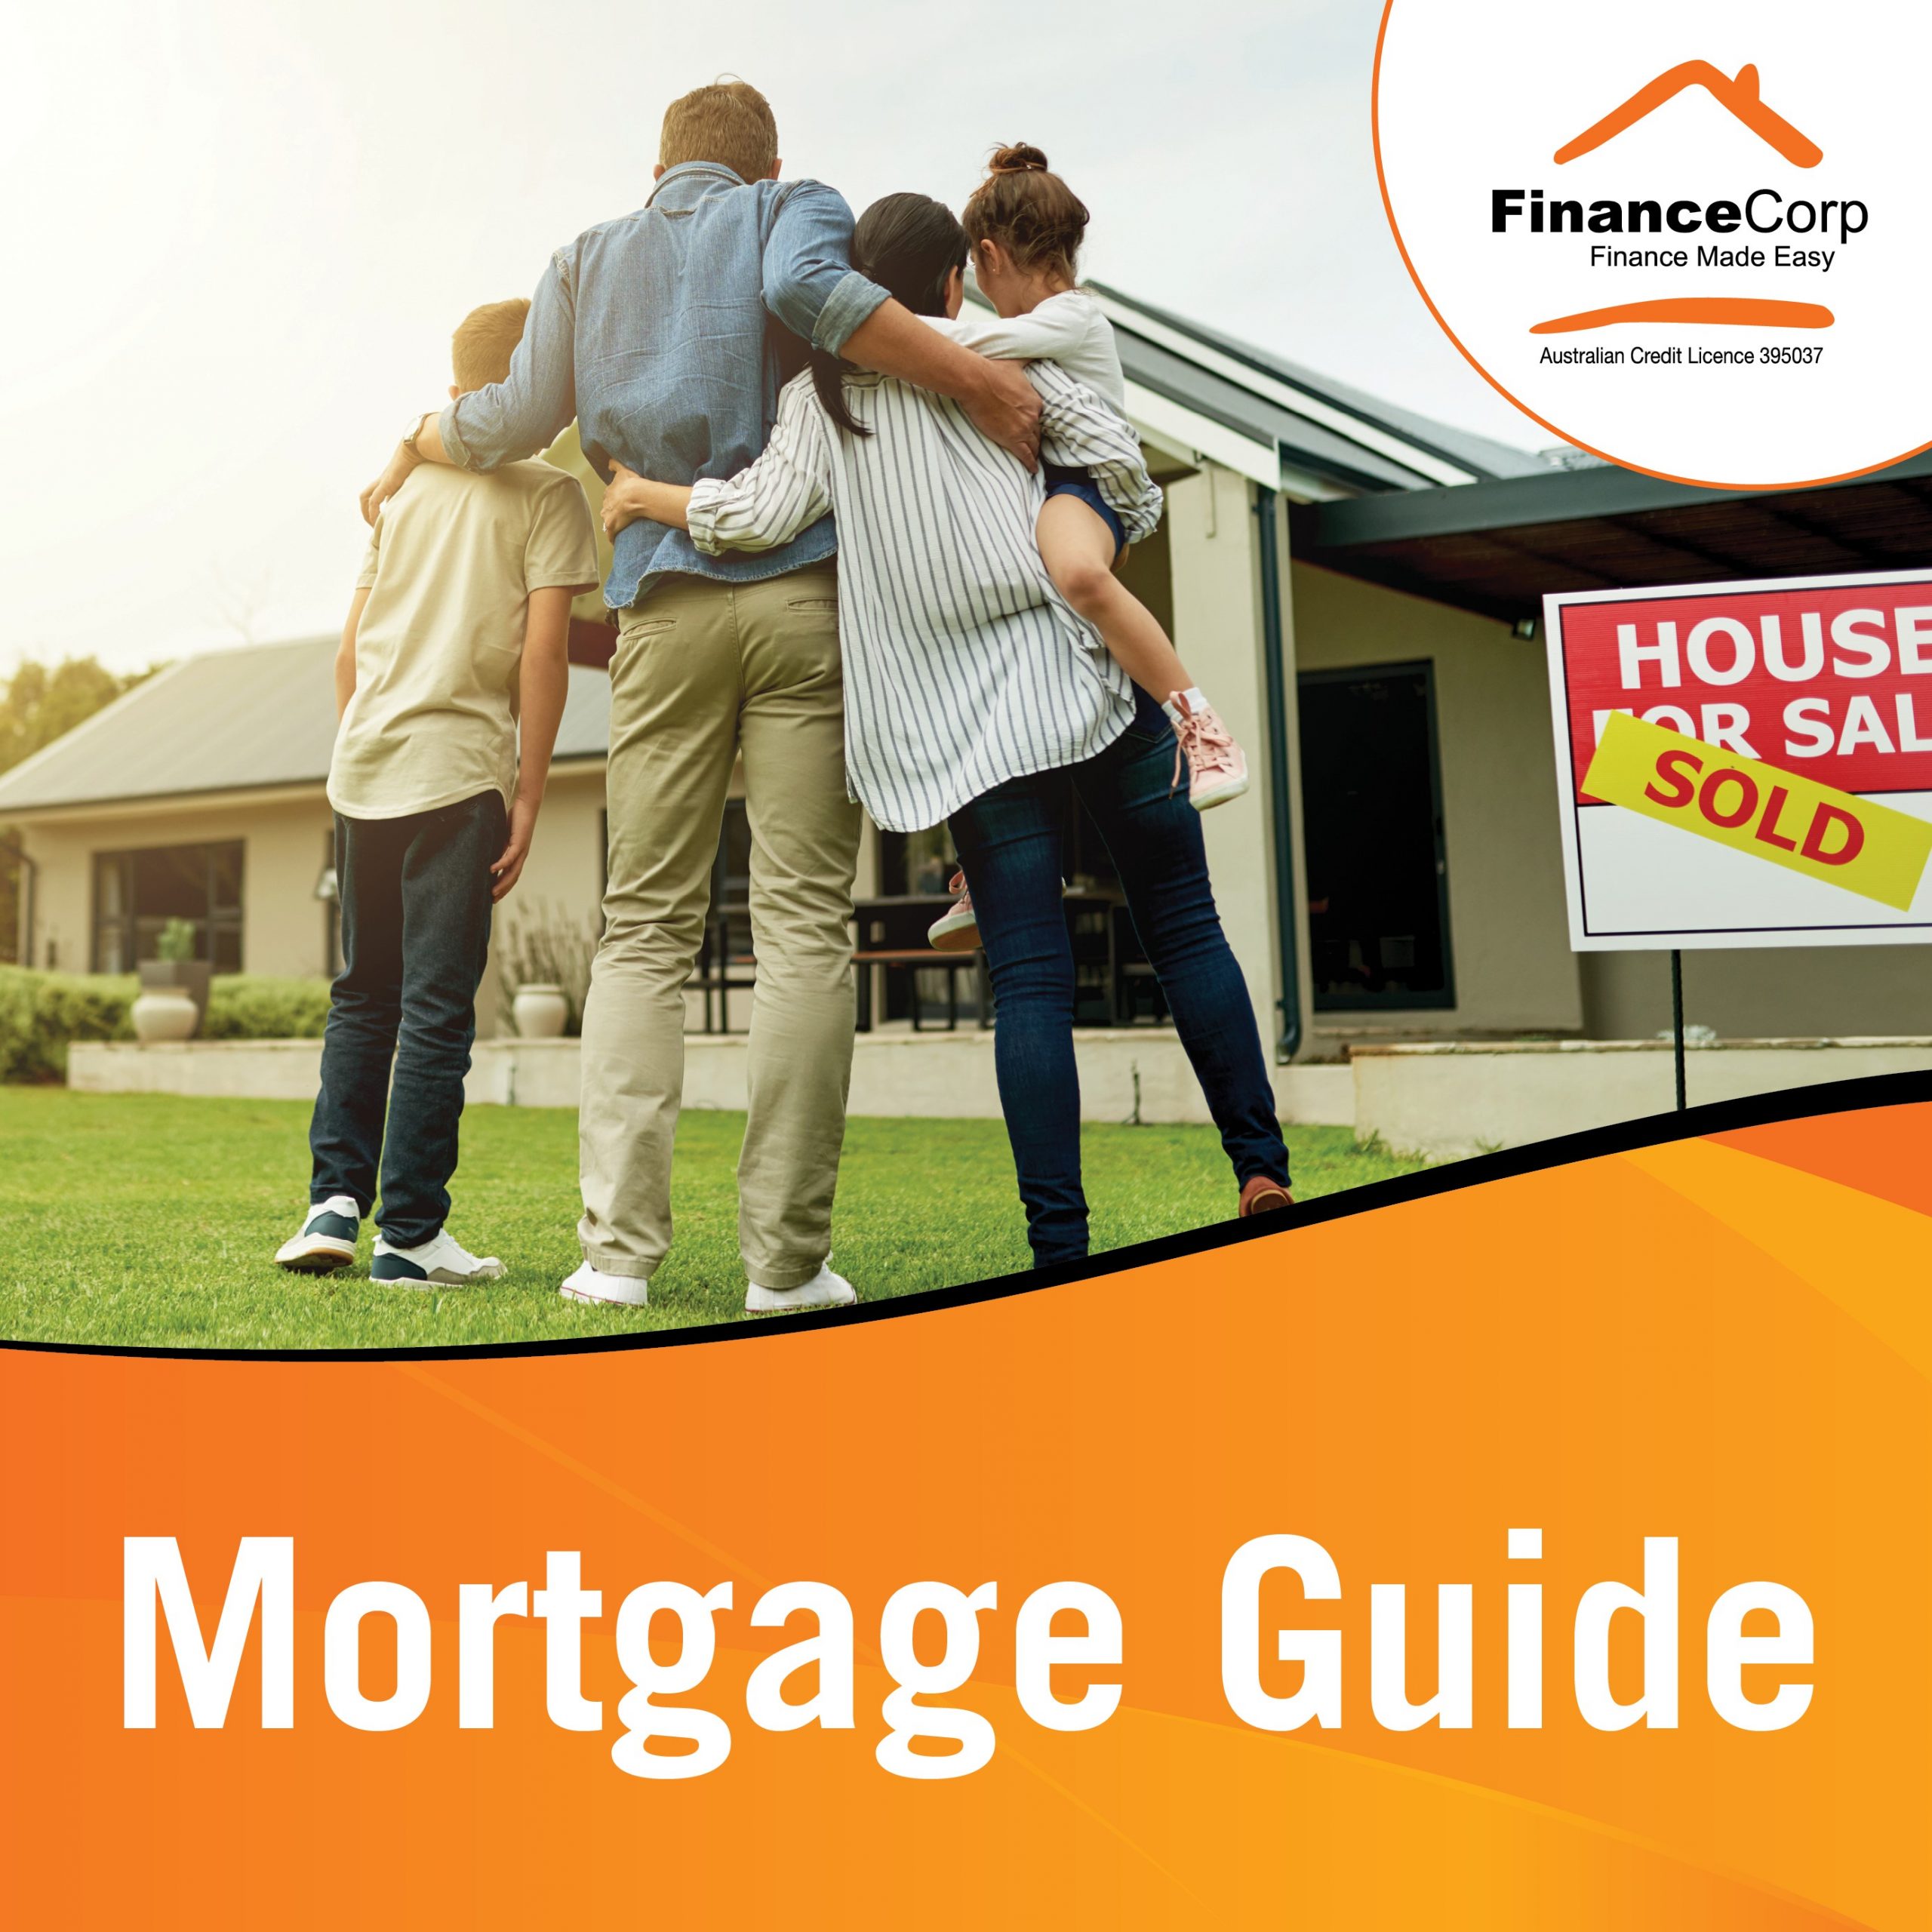 Mortgage guide